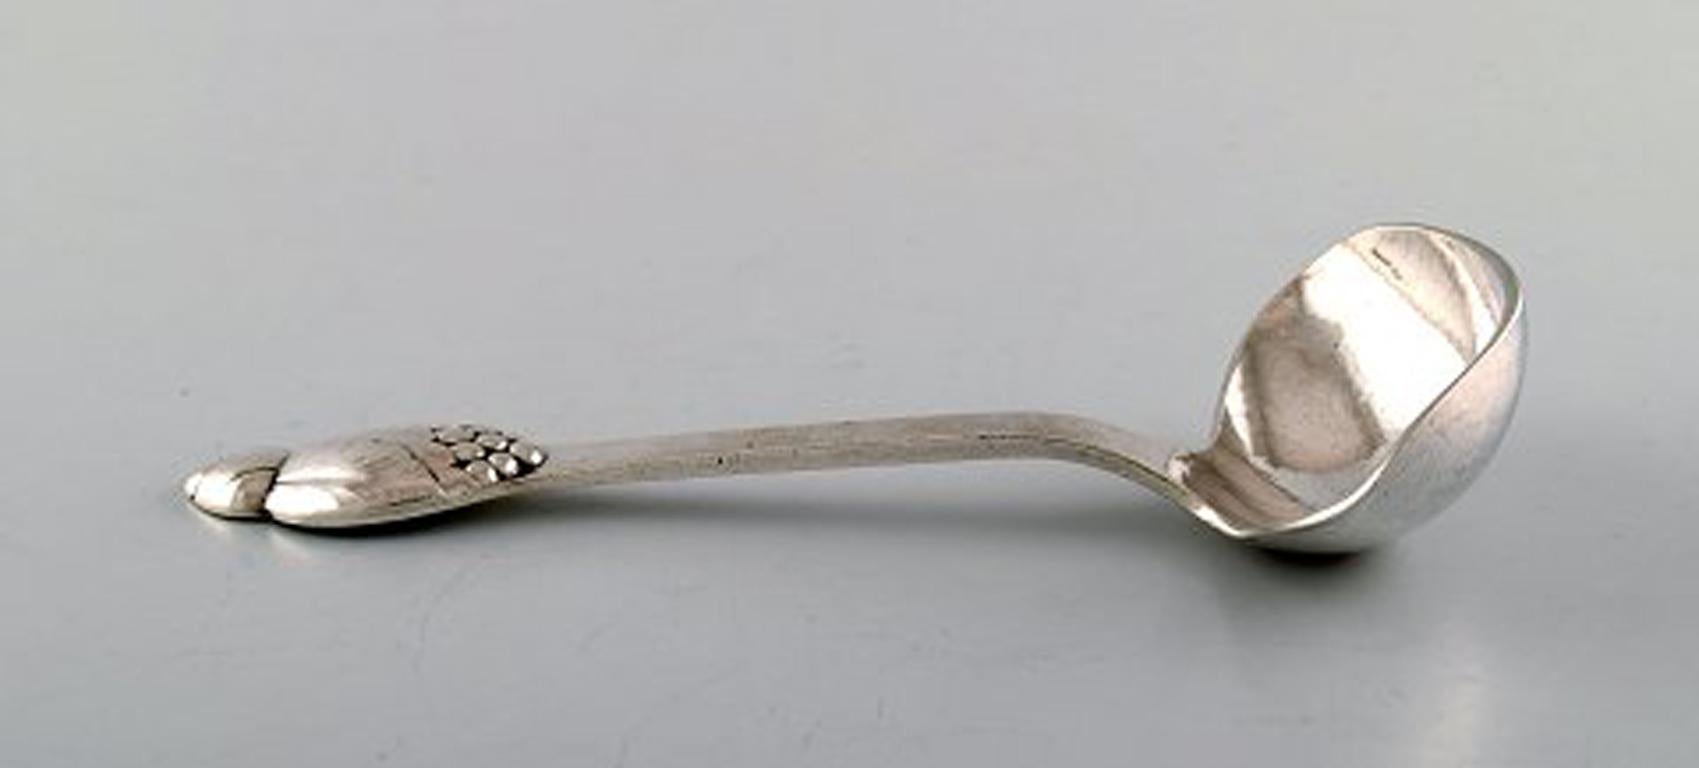 Art Nouveau Evald Nielsen Number 6, Sauce Spoon in Full Silver